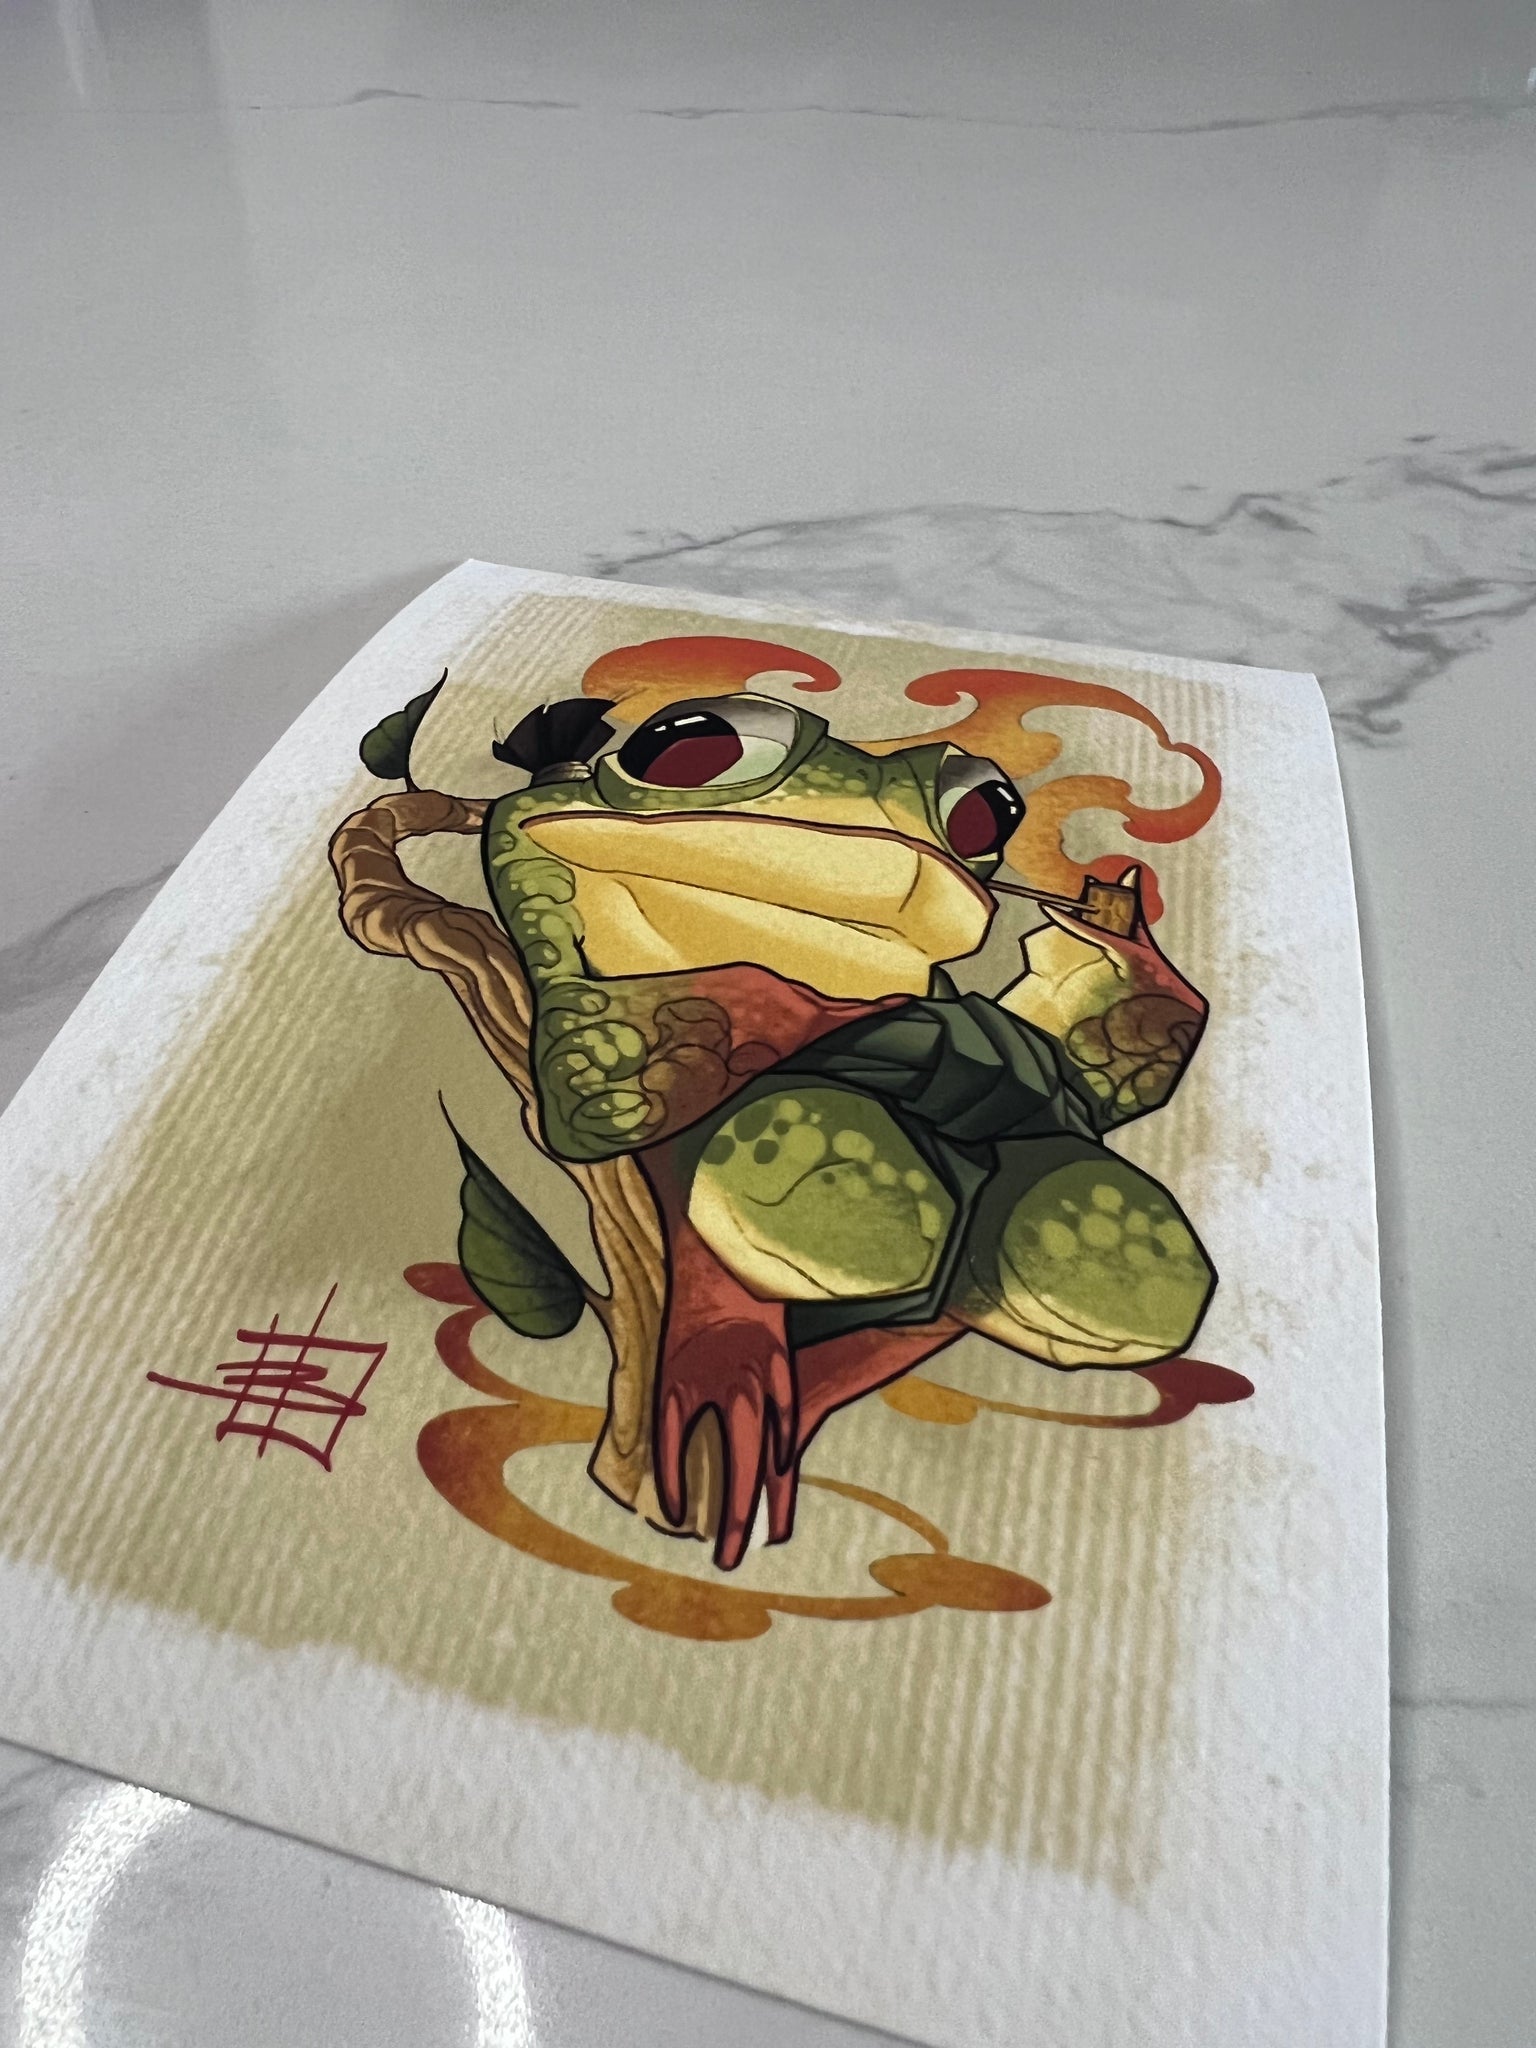 CINK x Briel Smoking Frog Print